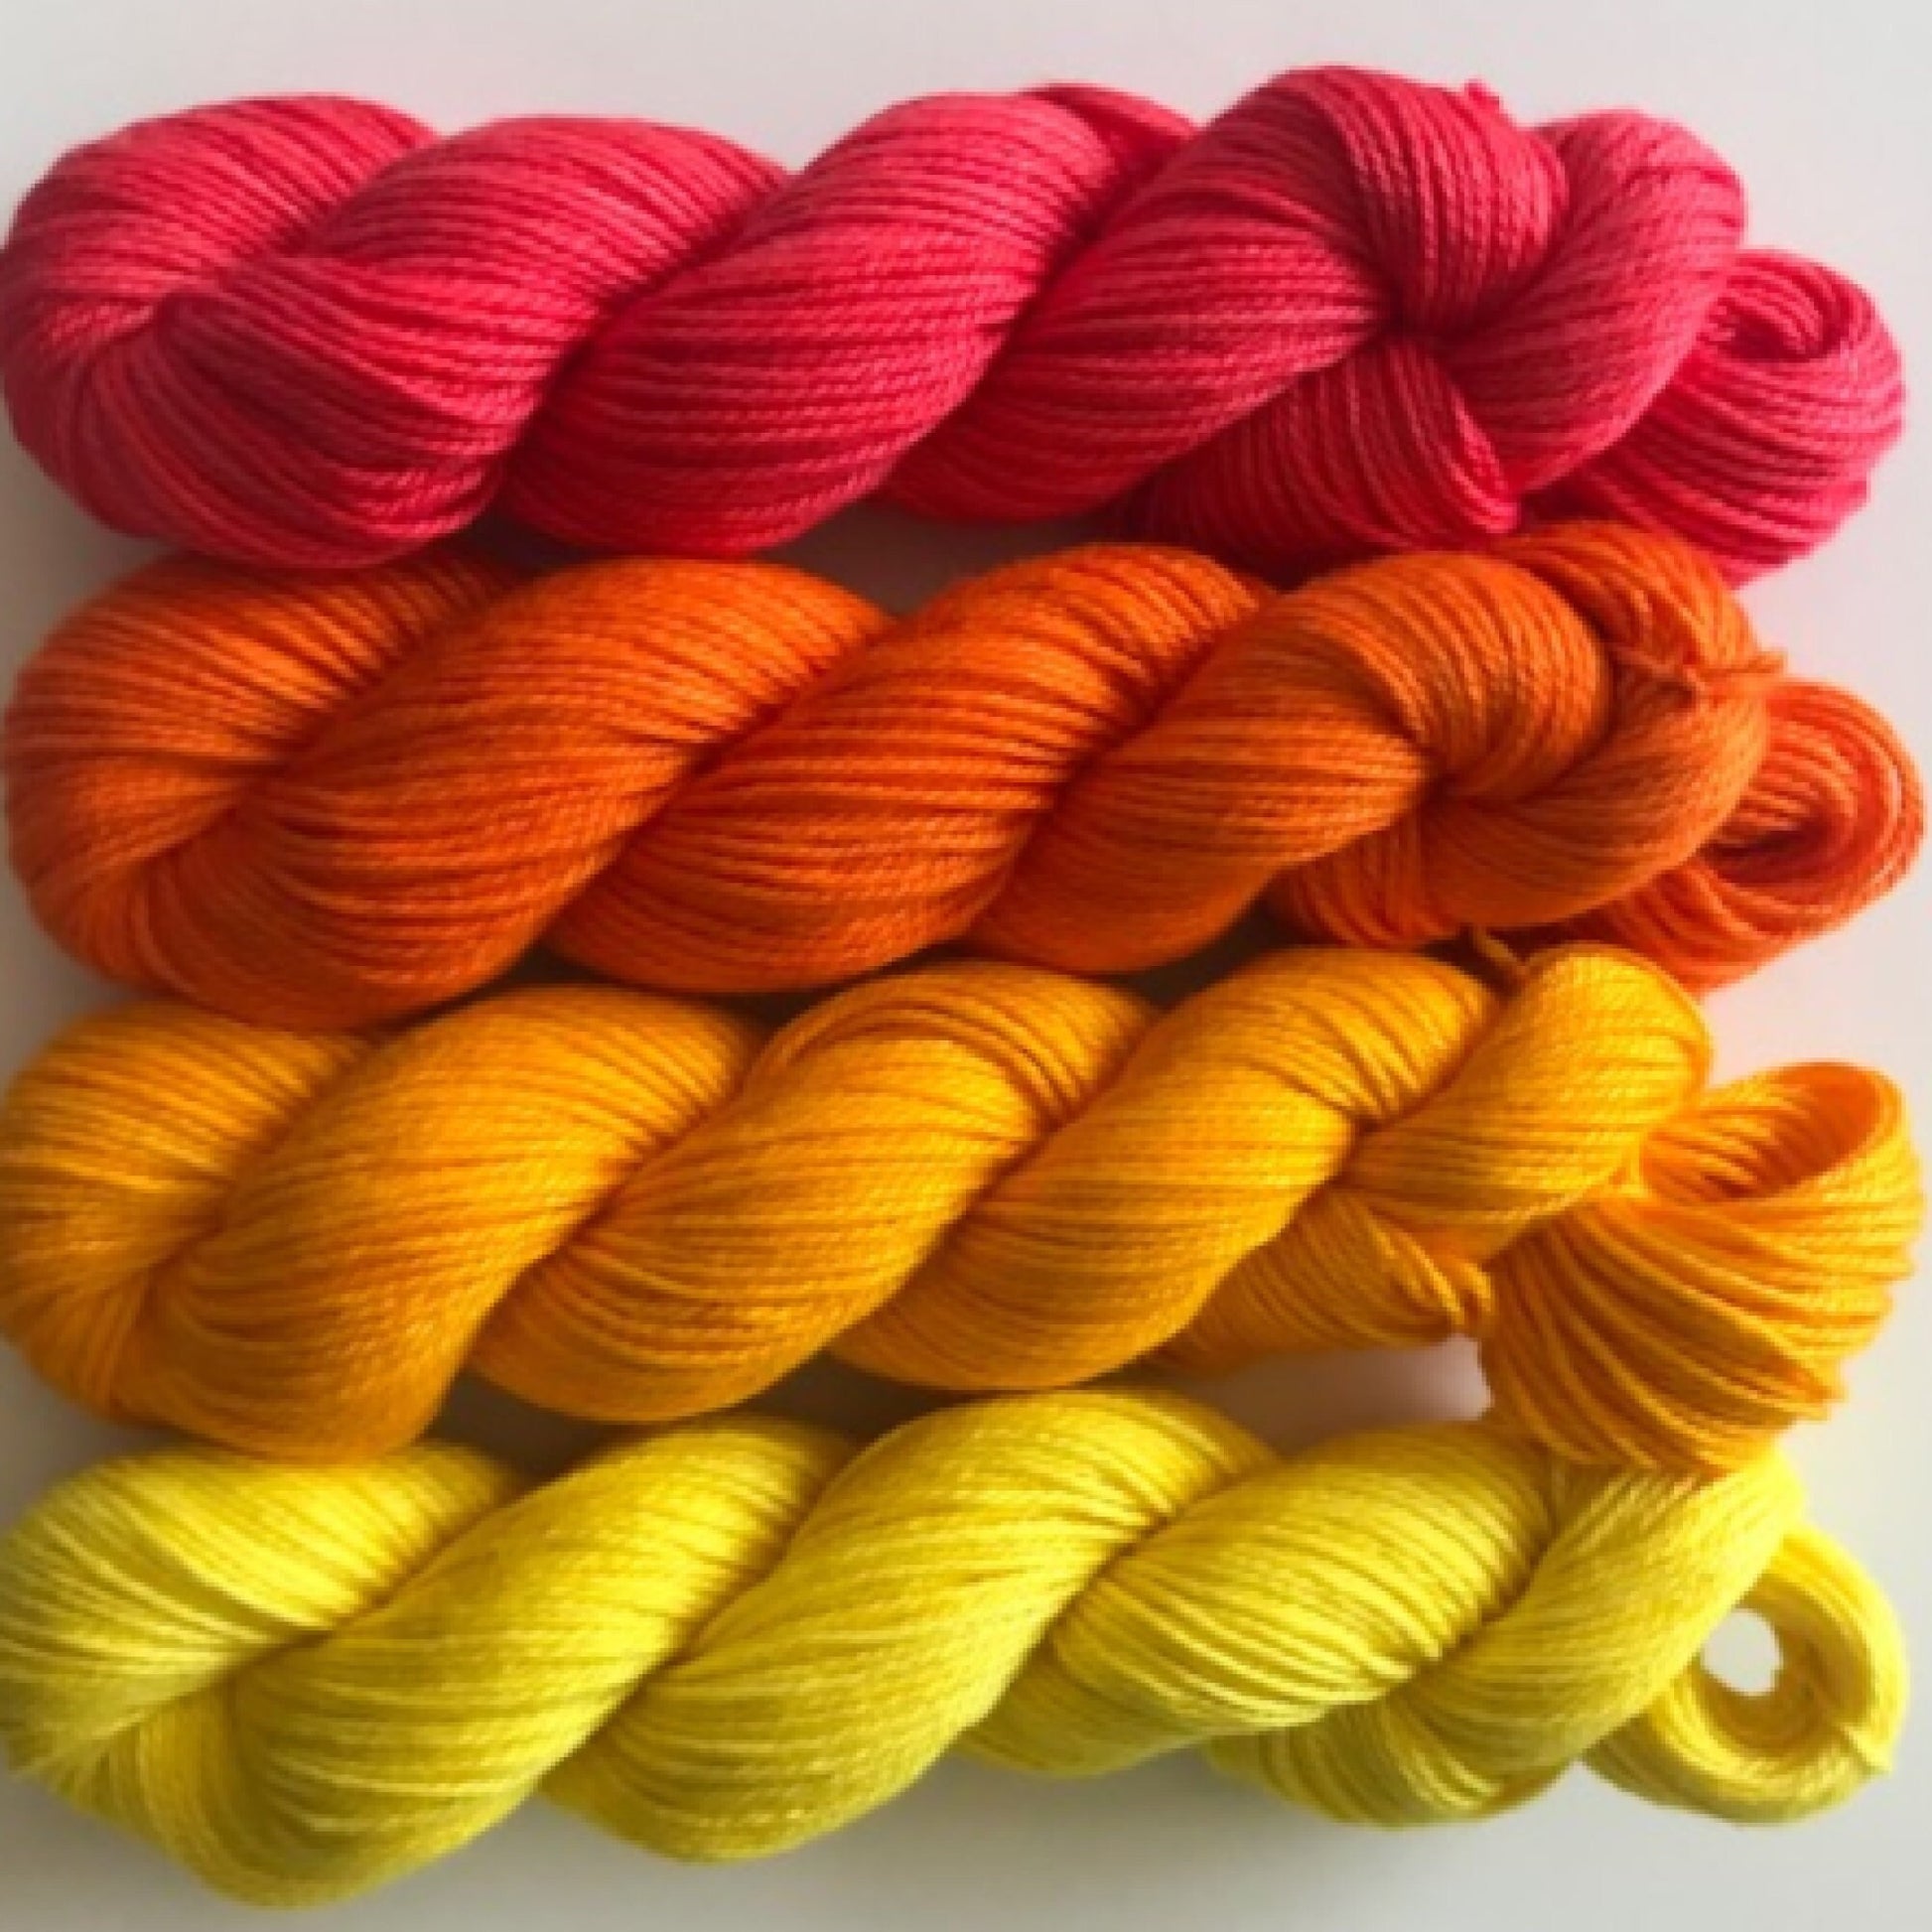 Vegan Sock / Fingering Yarn - Hand Dyed Bamboo Cotton - Choose Color & Skein Size - Light Red / Orange / Yellow Semi Solid - Artisan Yarn